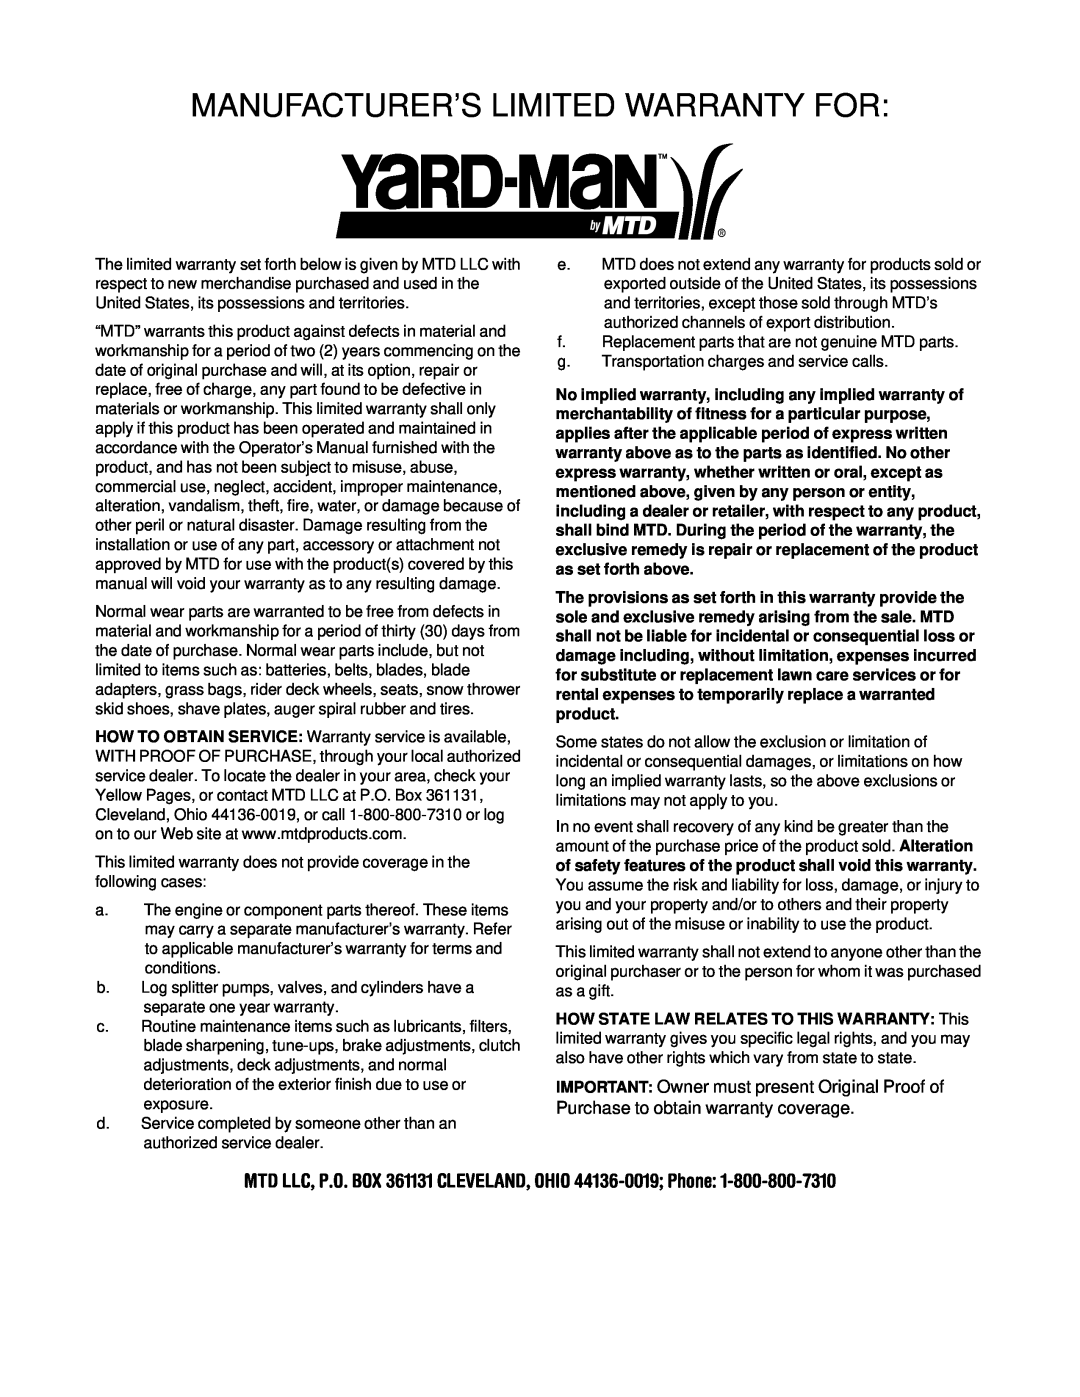 Yard-Man 203 manual Manufacturer’S Limited Warranty For 